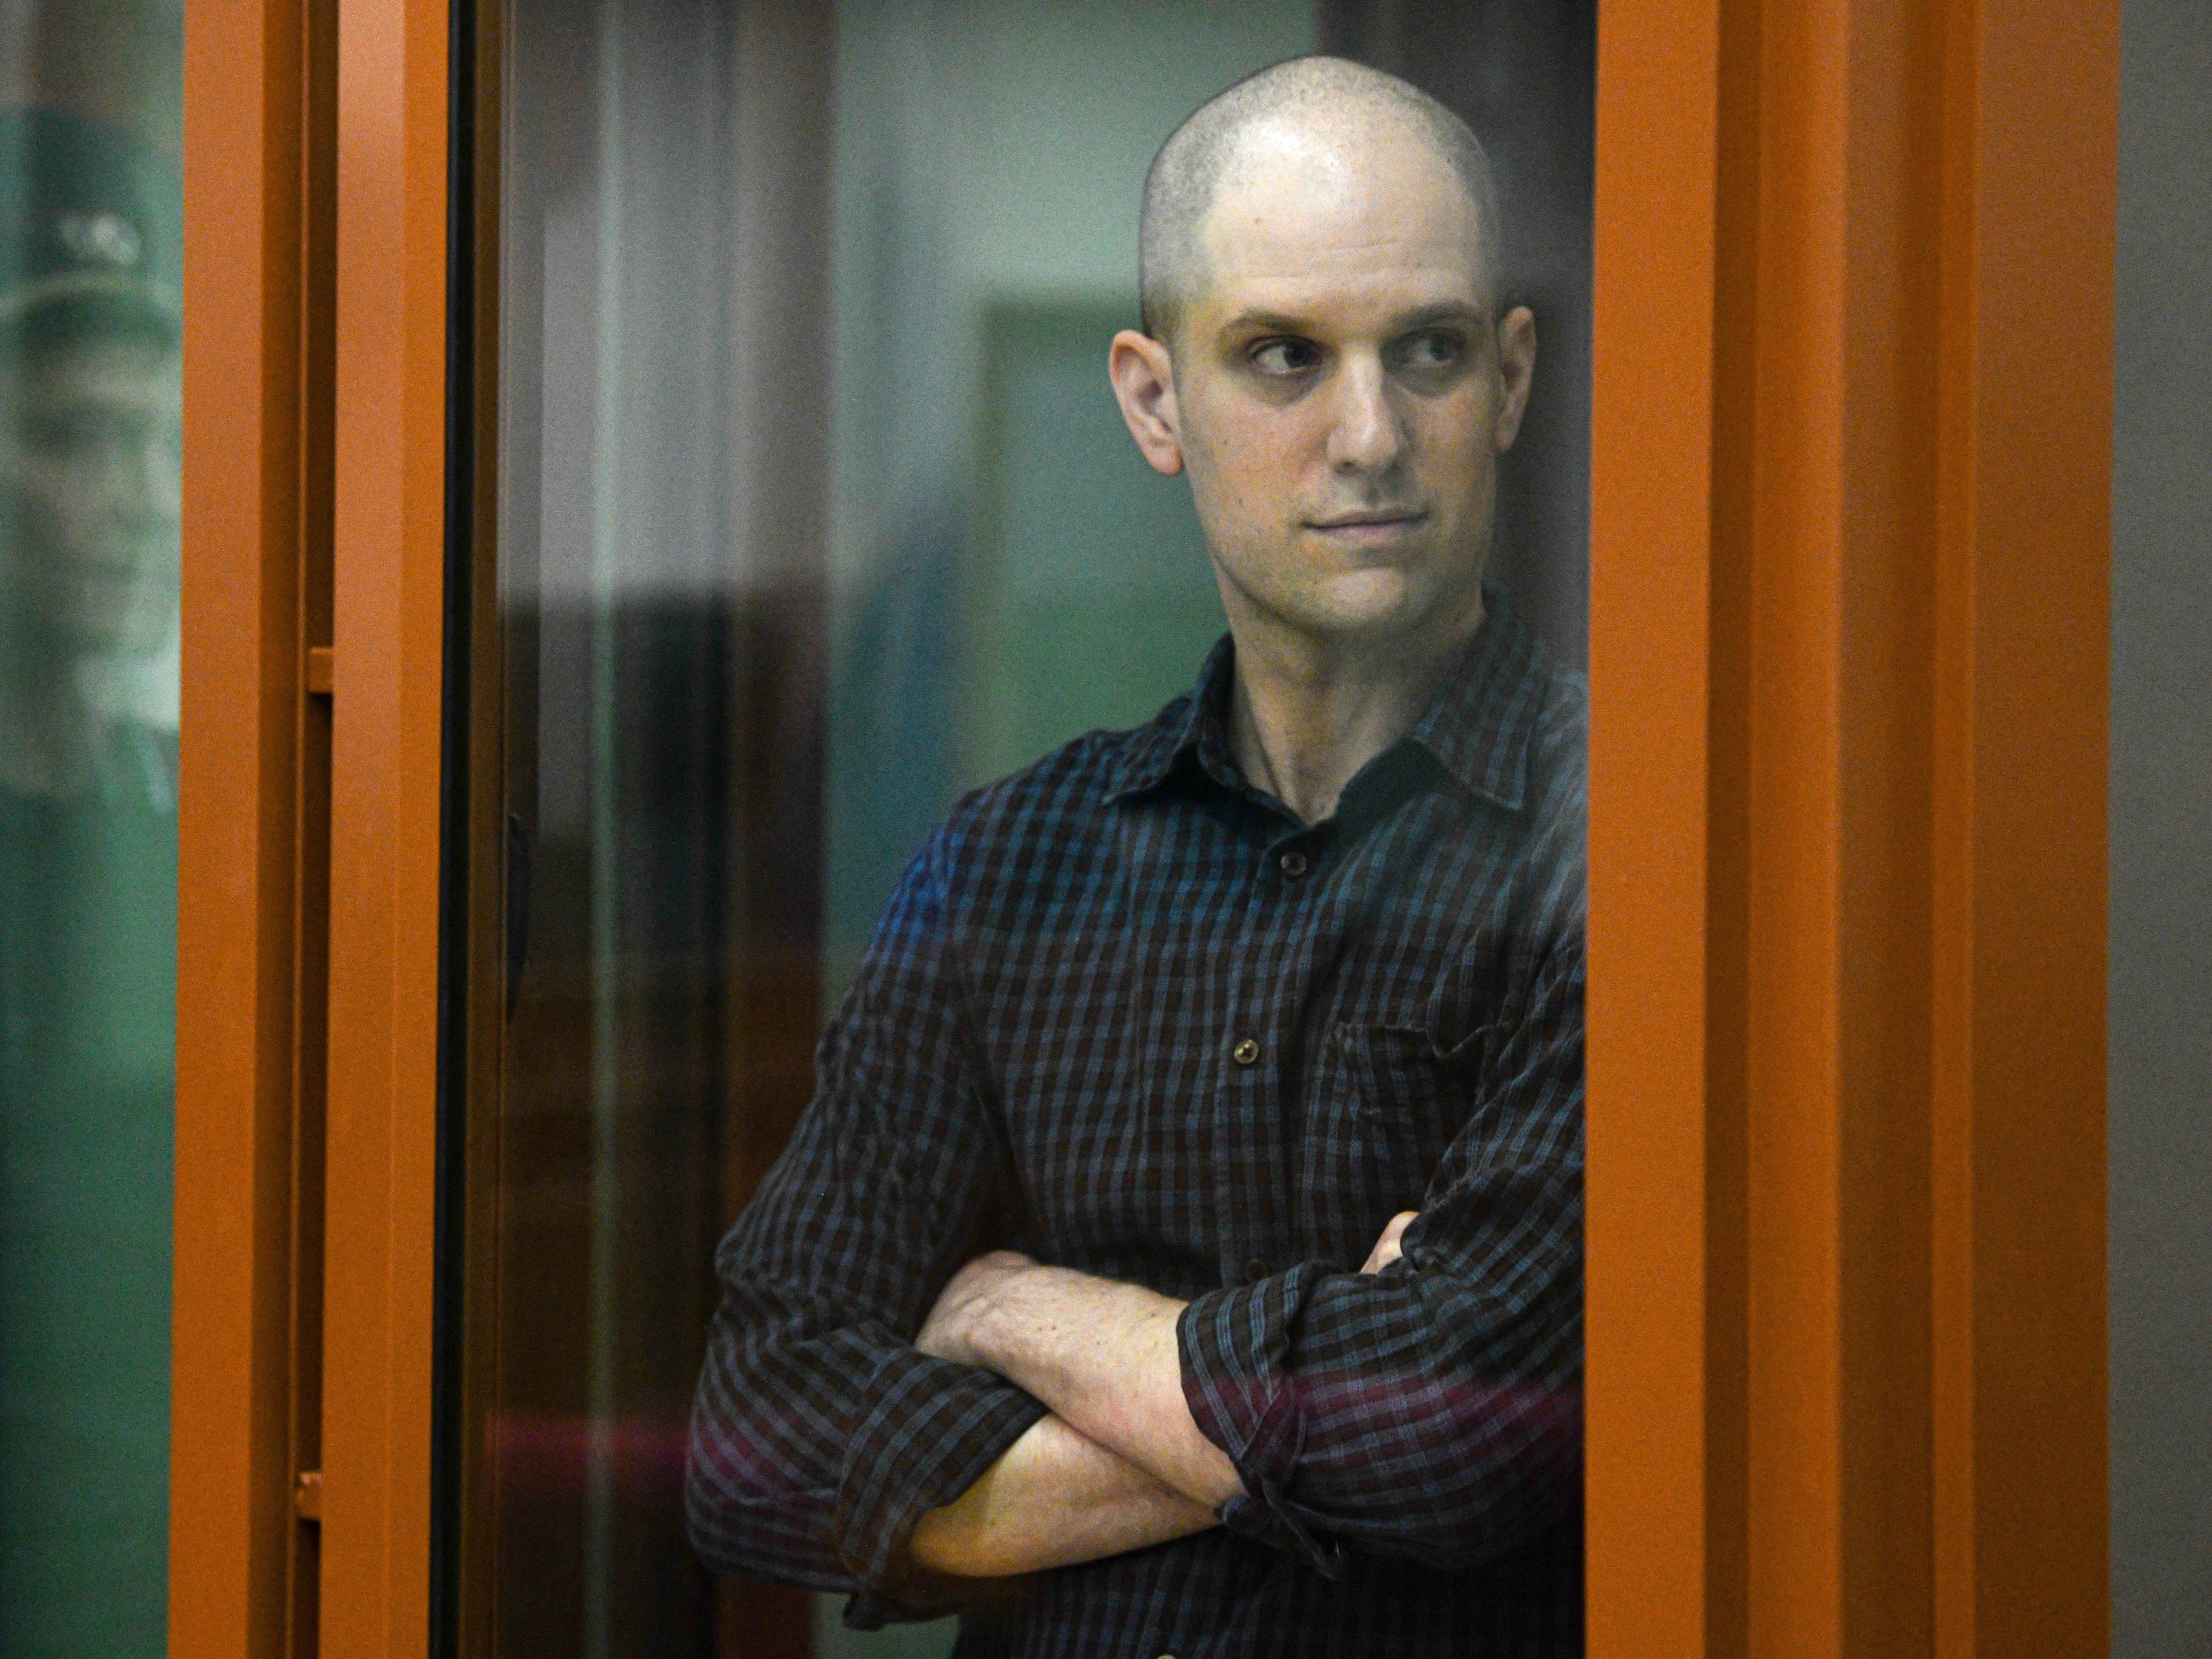 Trial of US journalist Evan Gershkovich in Russia reaches closing arguments